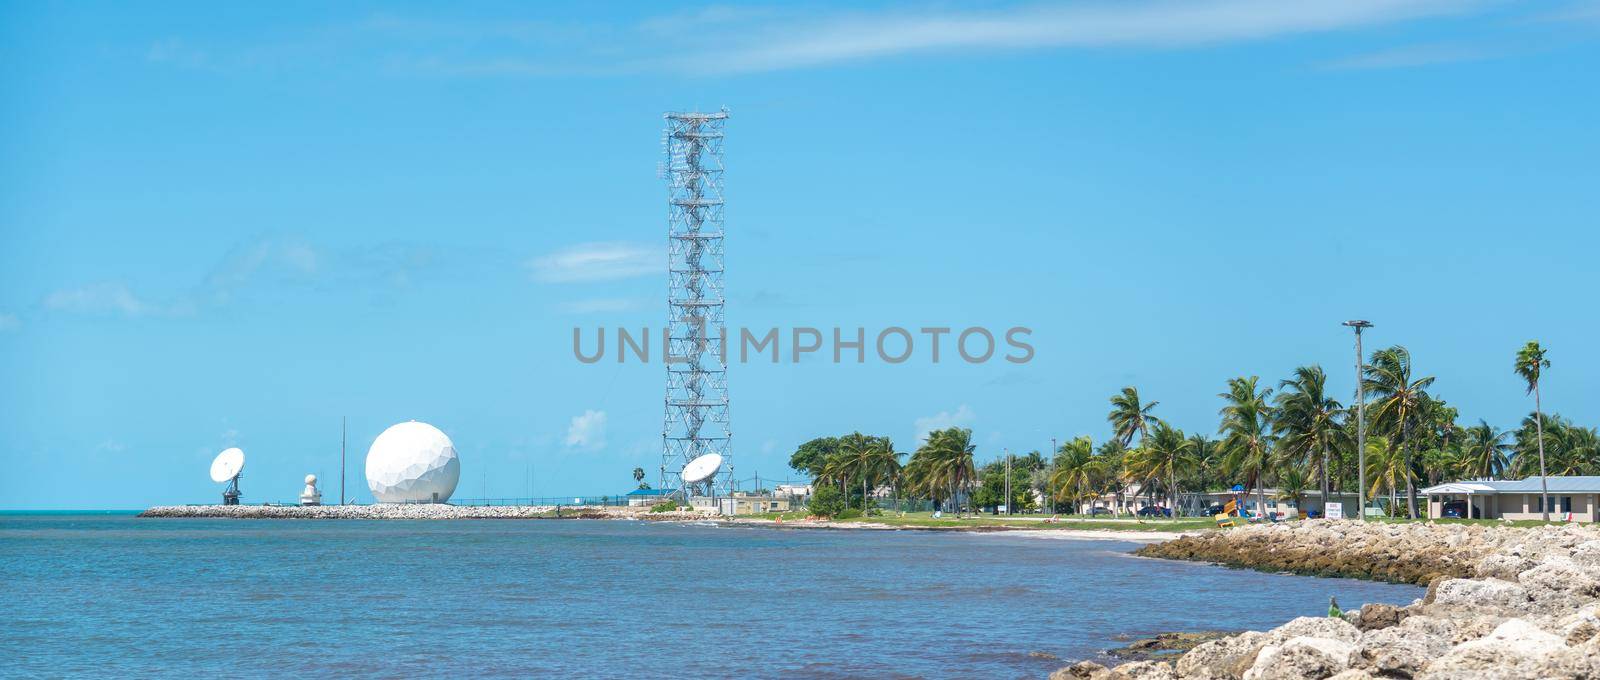 Key West, Florida, USA - September 12, 2019: Naval Air Station Key West in Key West Florida